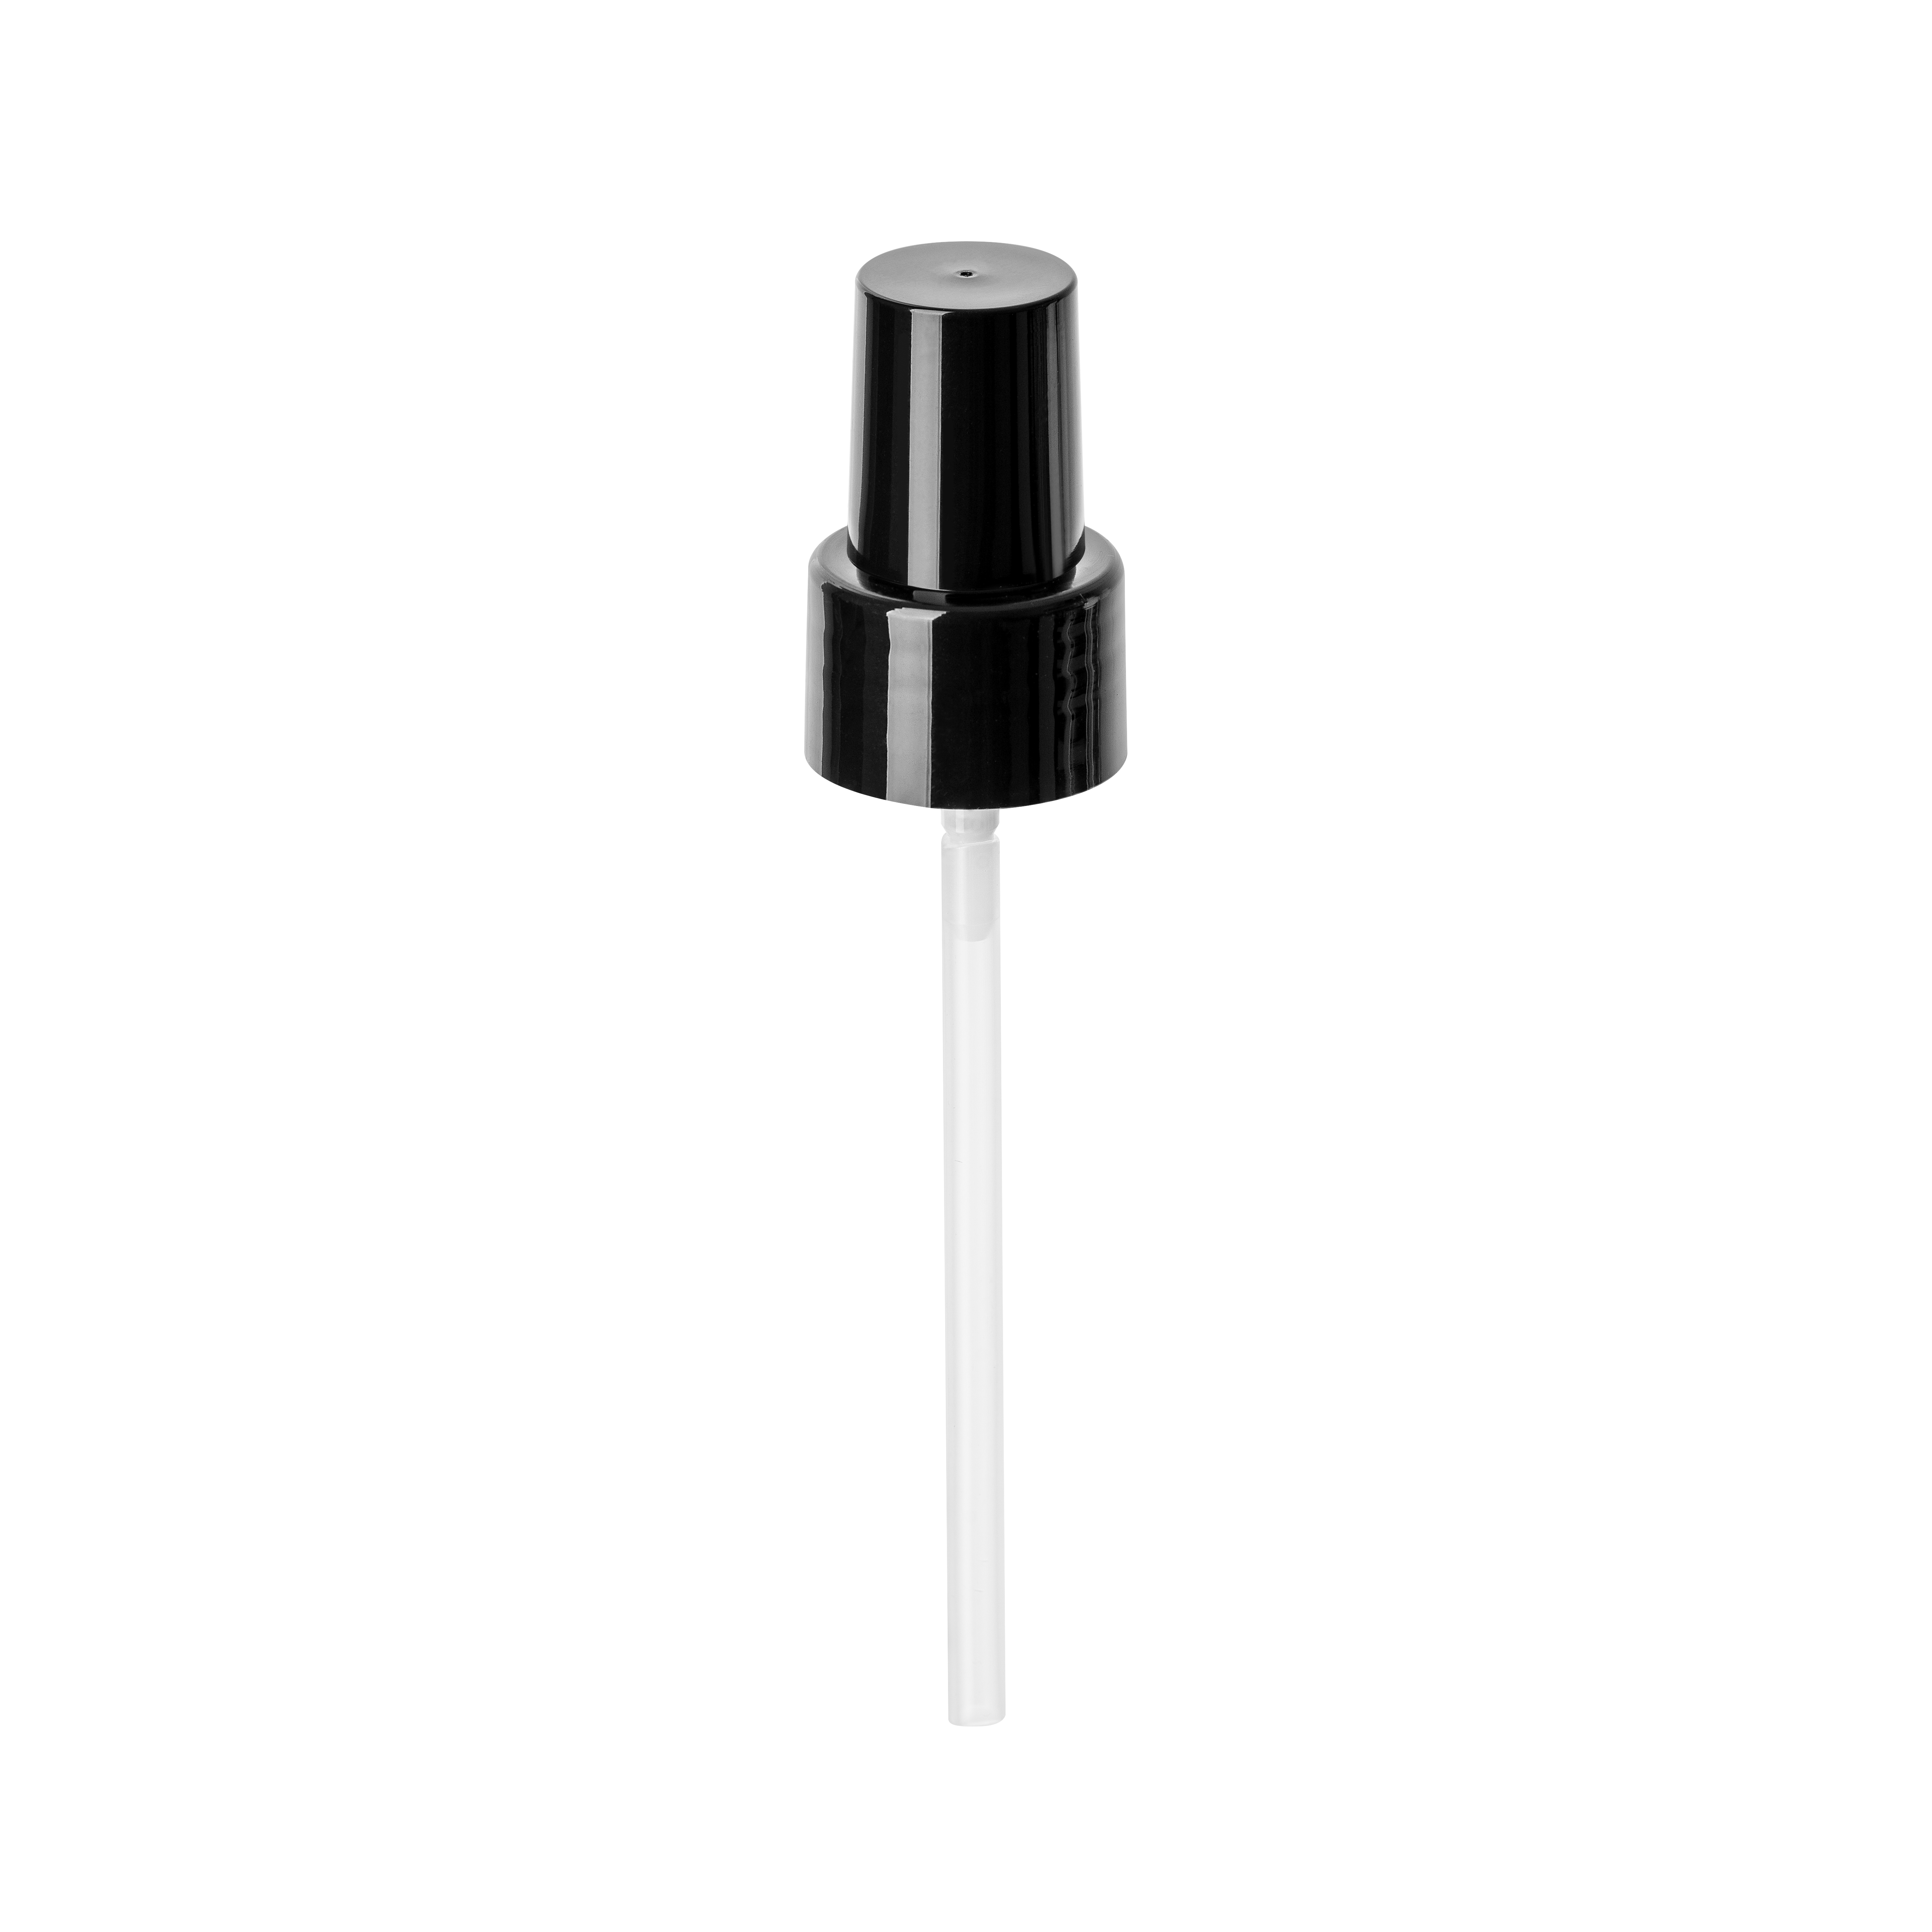 Lotion pump Sinfonia, 24/410, PP, black, glossy finish, dose 0.19 ml, black overcap (Laurel 50)  